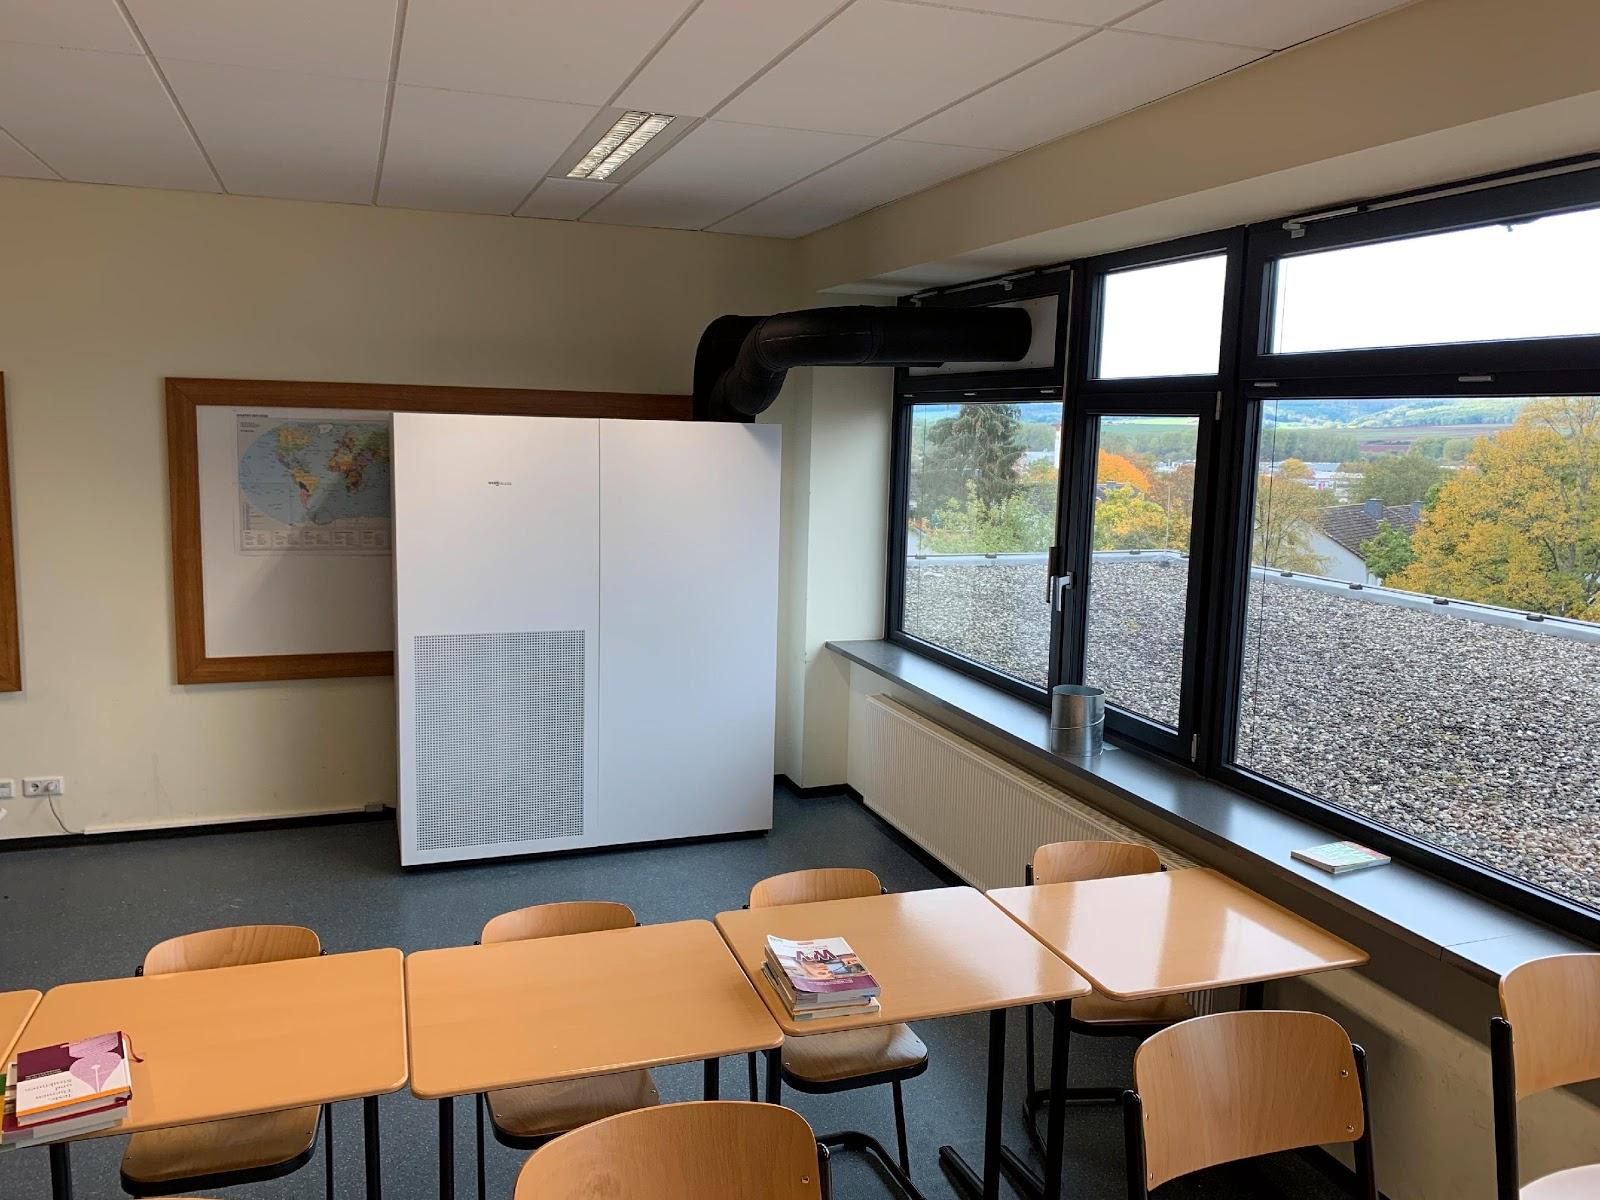 Viessmann new air ventilation solution to help schools battle COVID-19